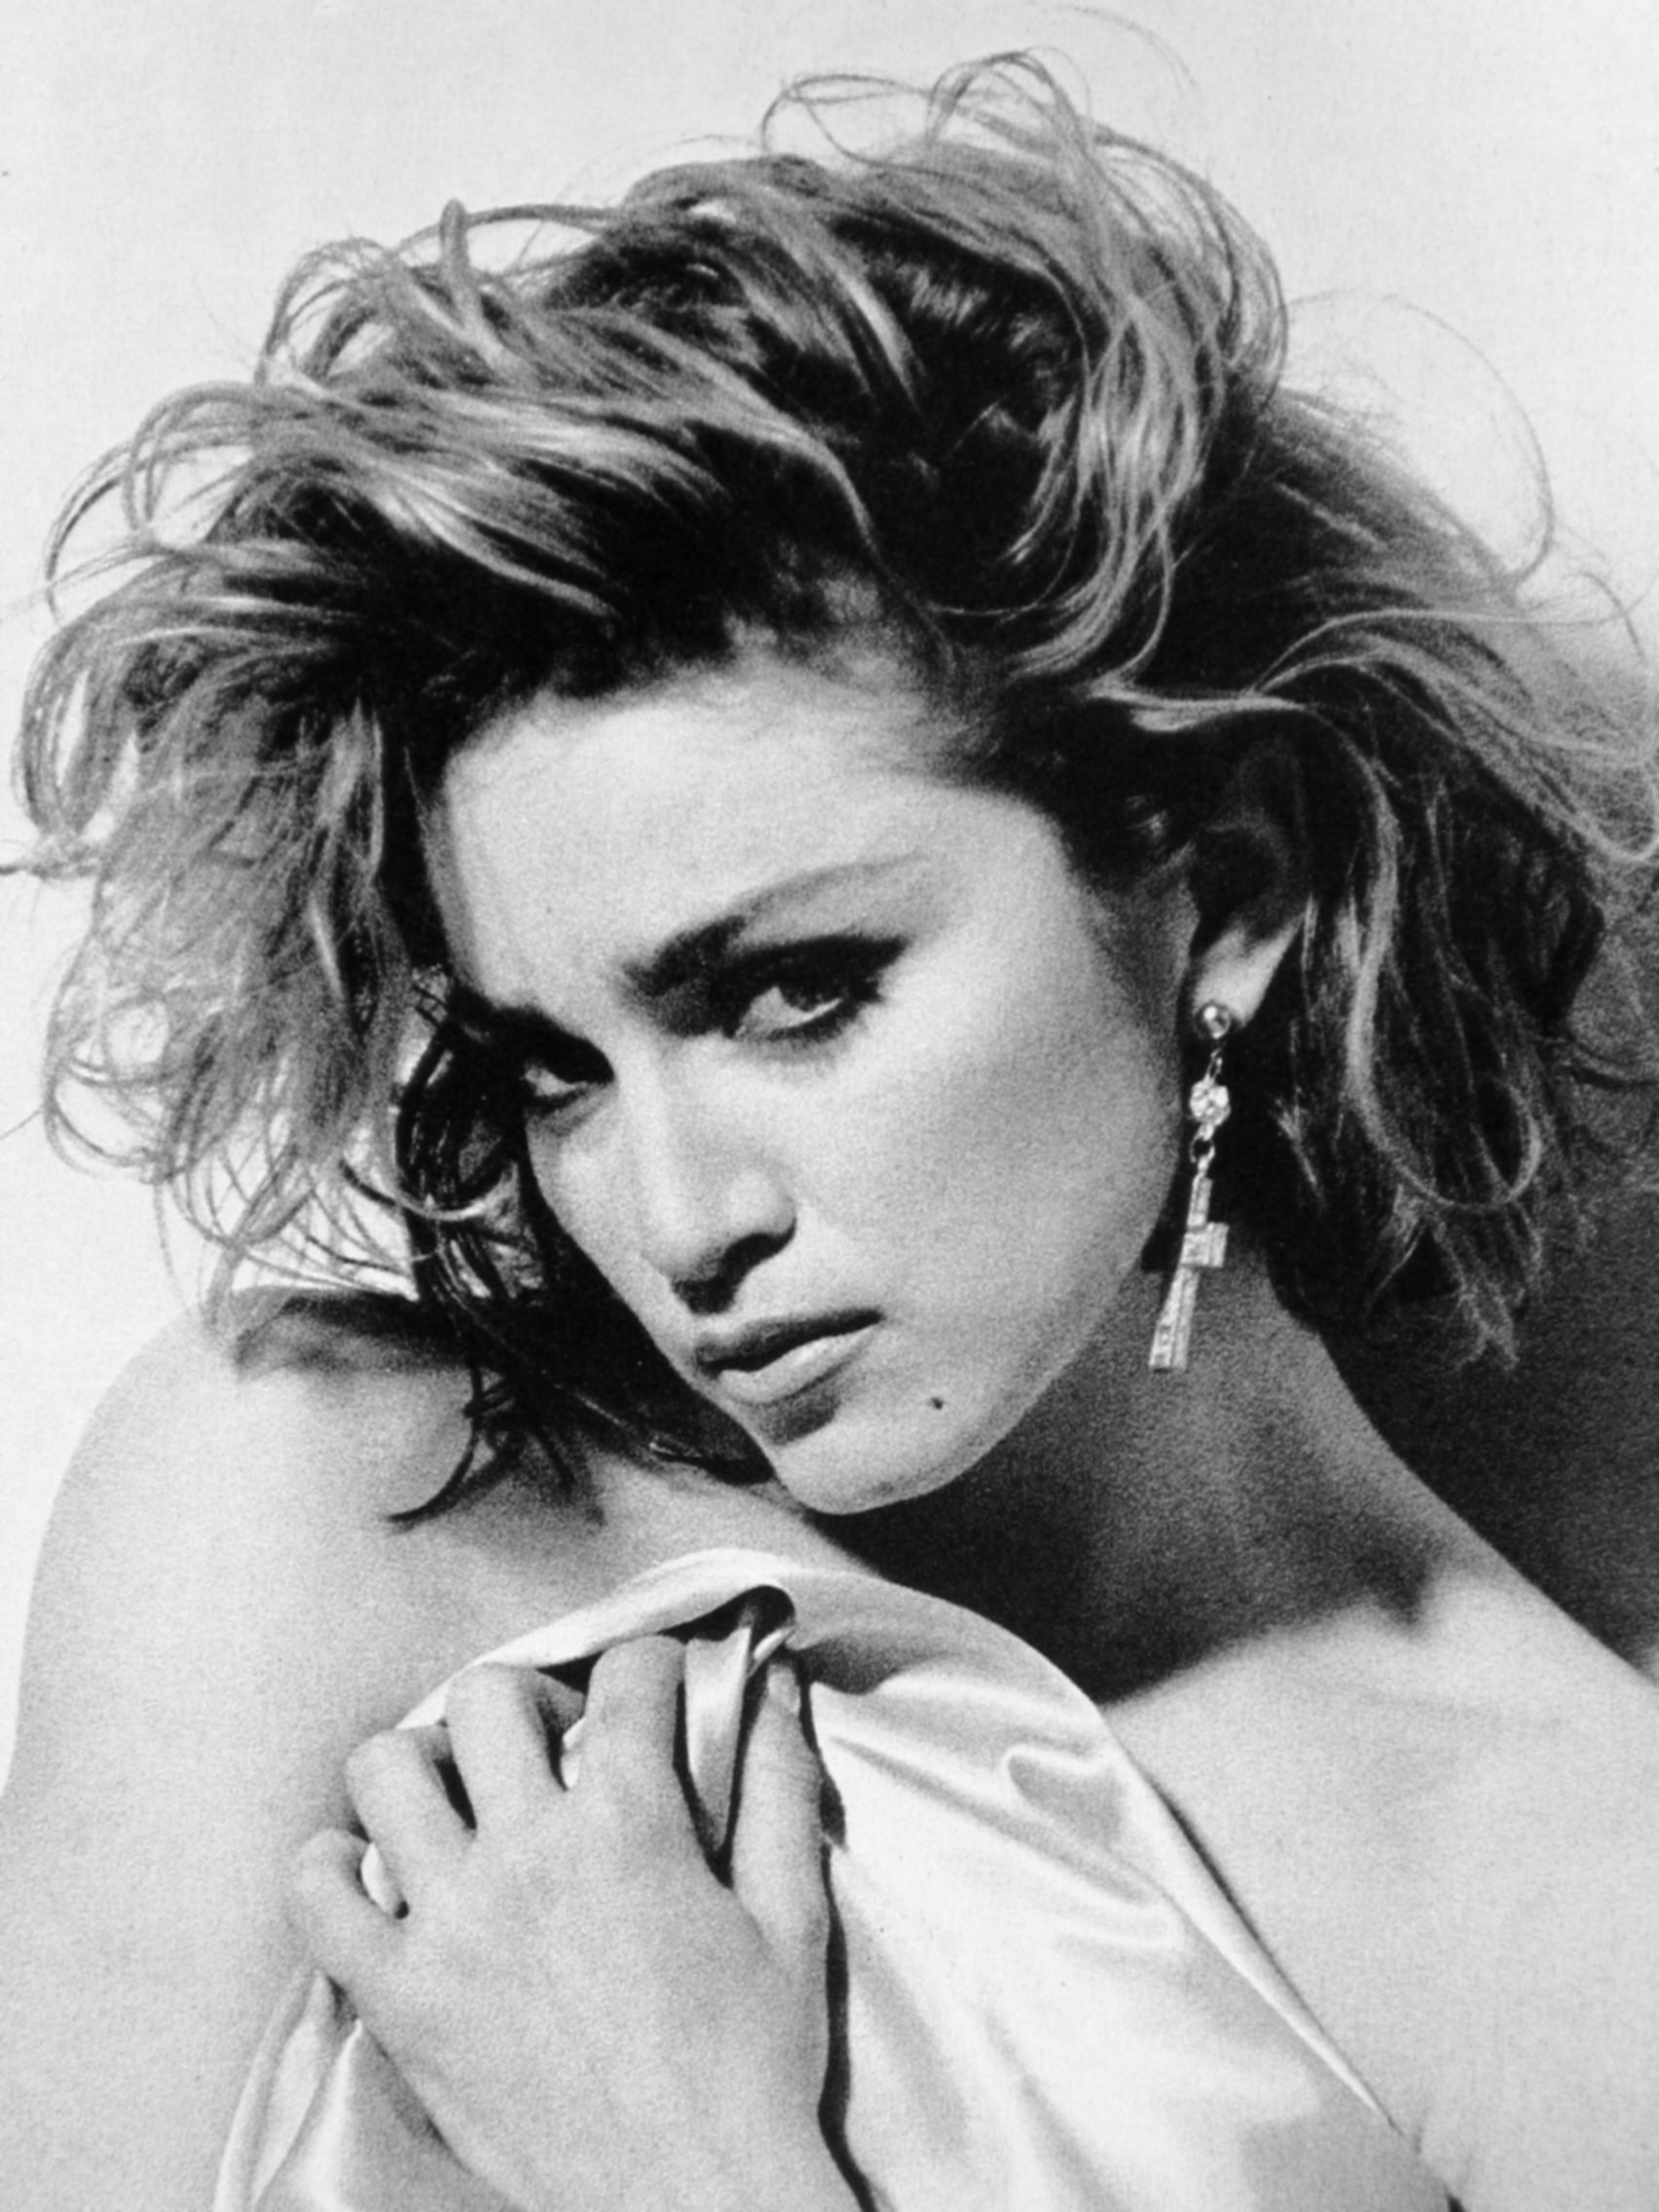 80s Madonna Wallpaper Free 80s Madonna Background